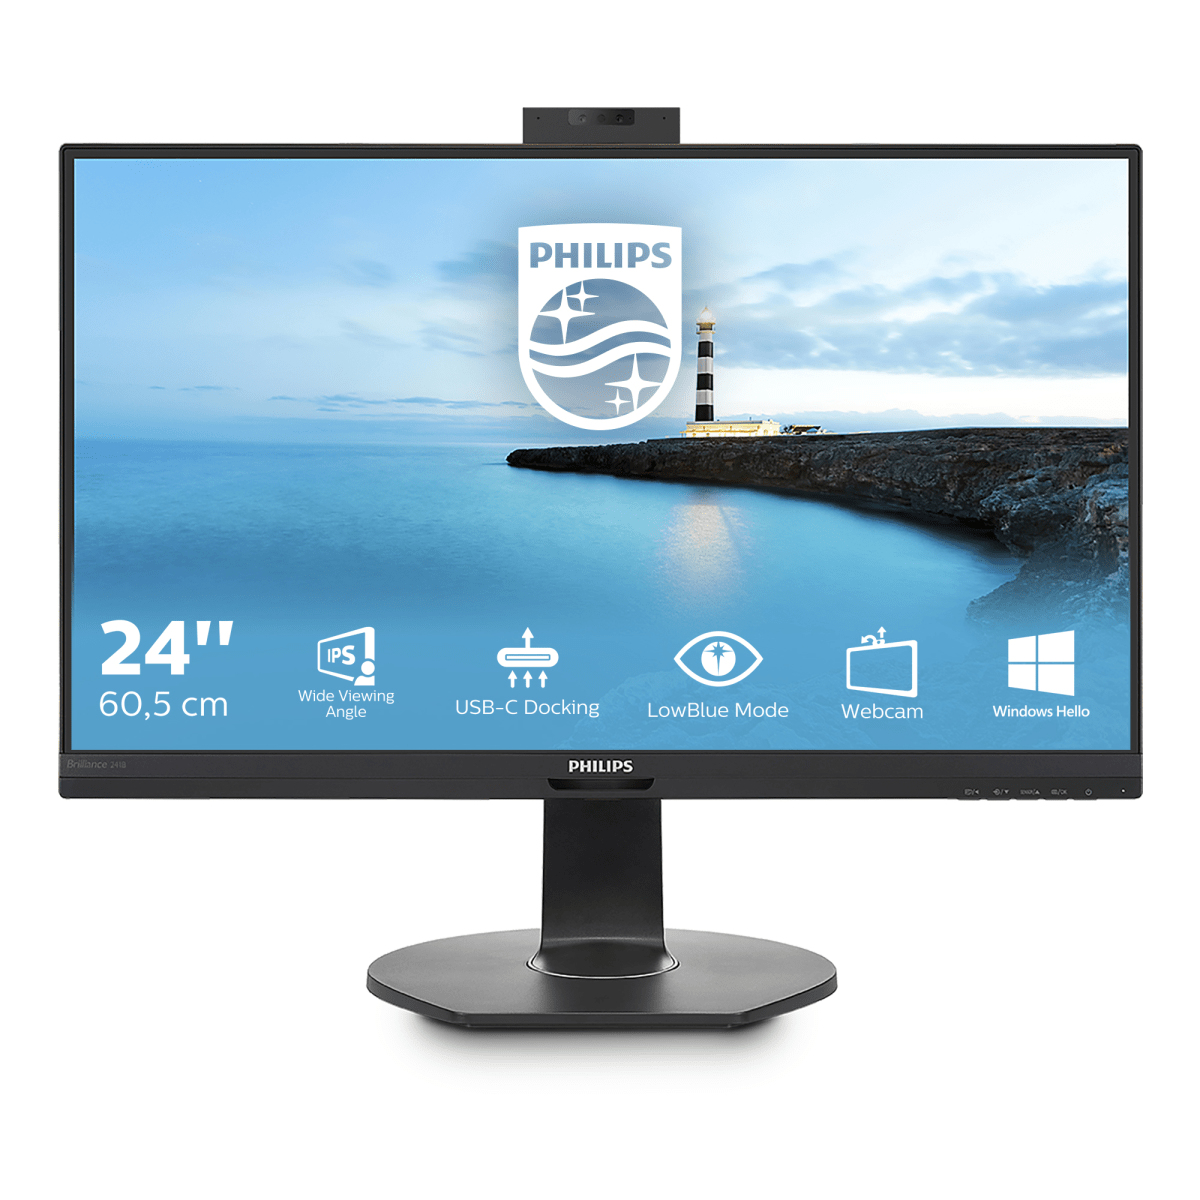 B Line LCD monitor with USB-C docking